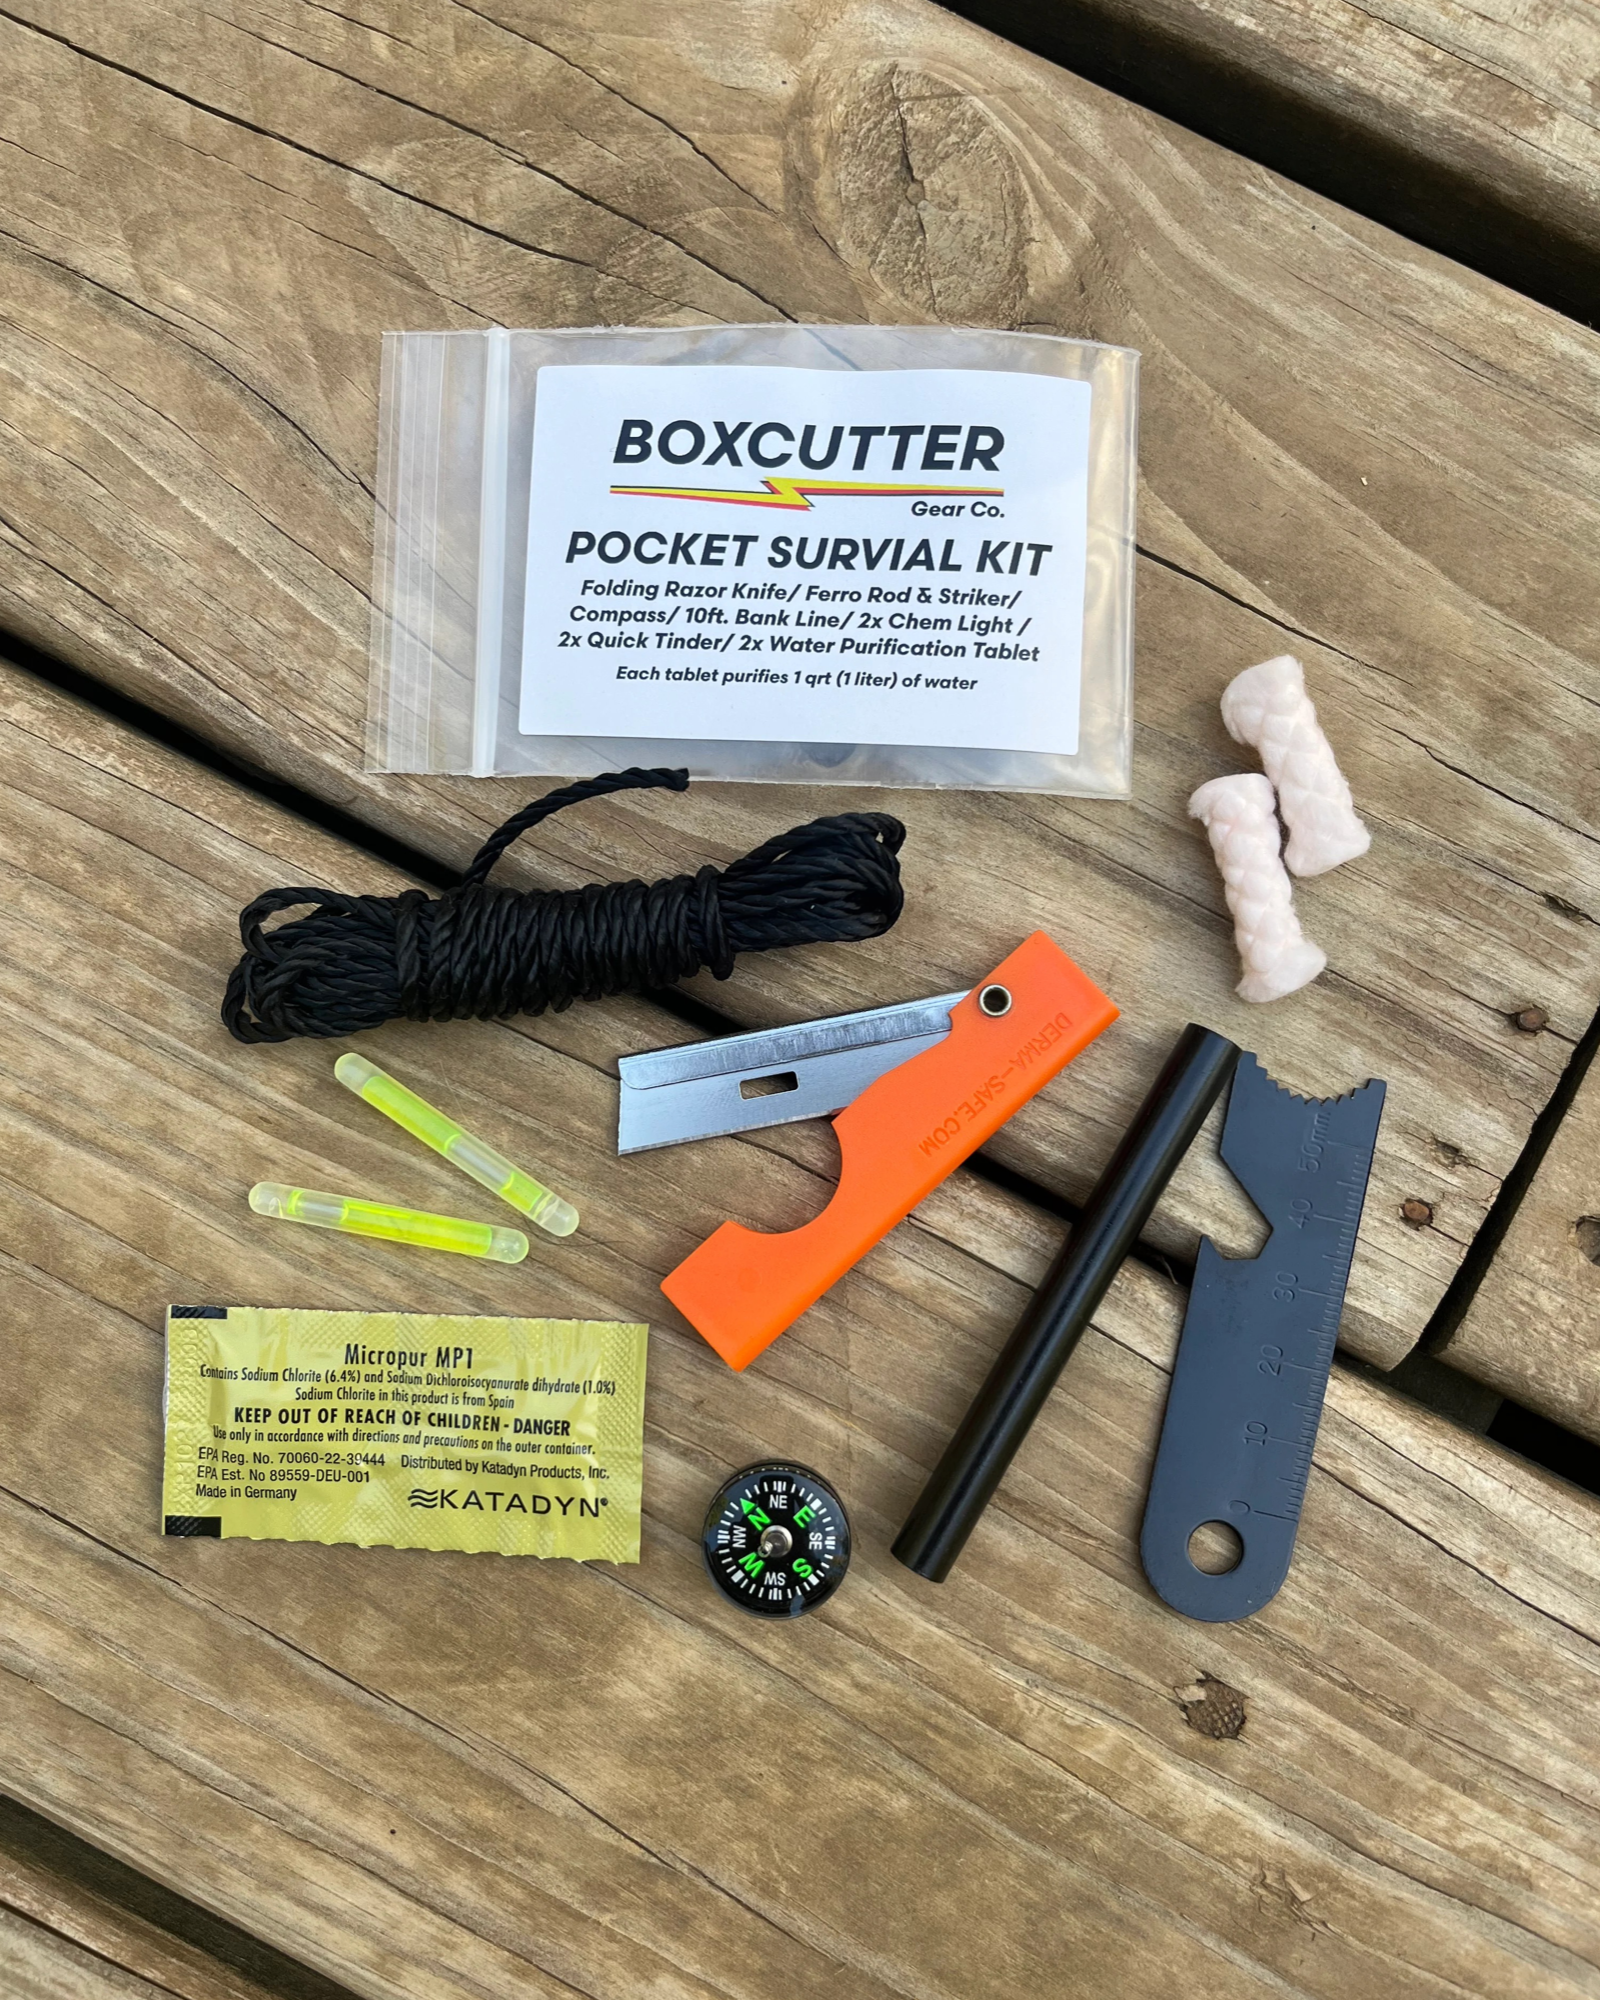 PSK] Pocket Survival Kit – BoxCutter Gear Co.